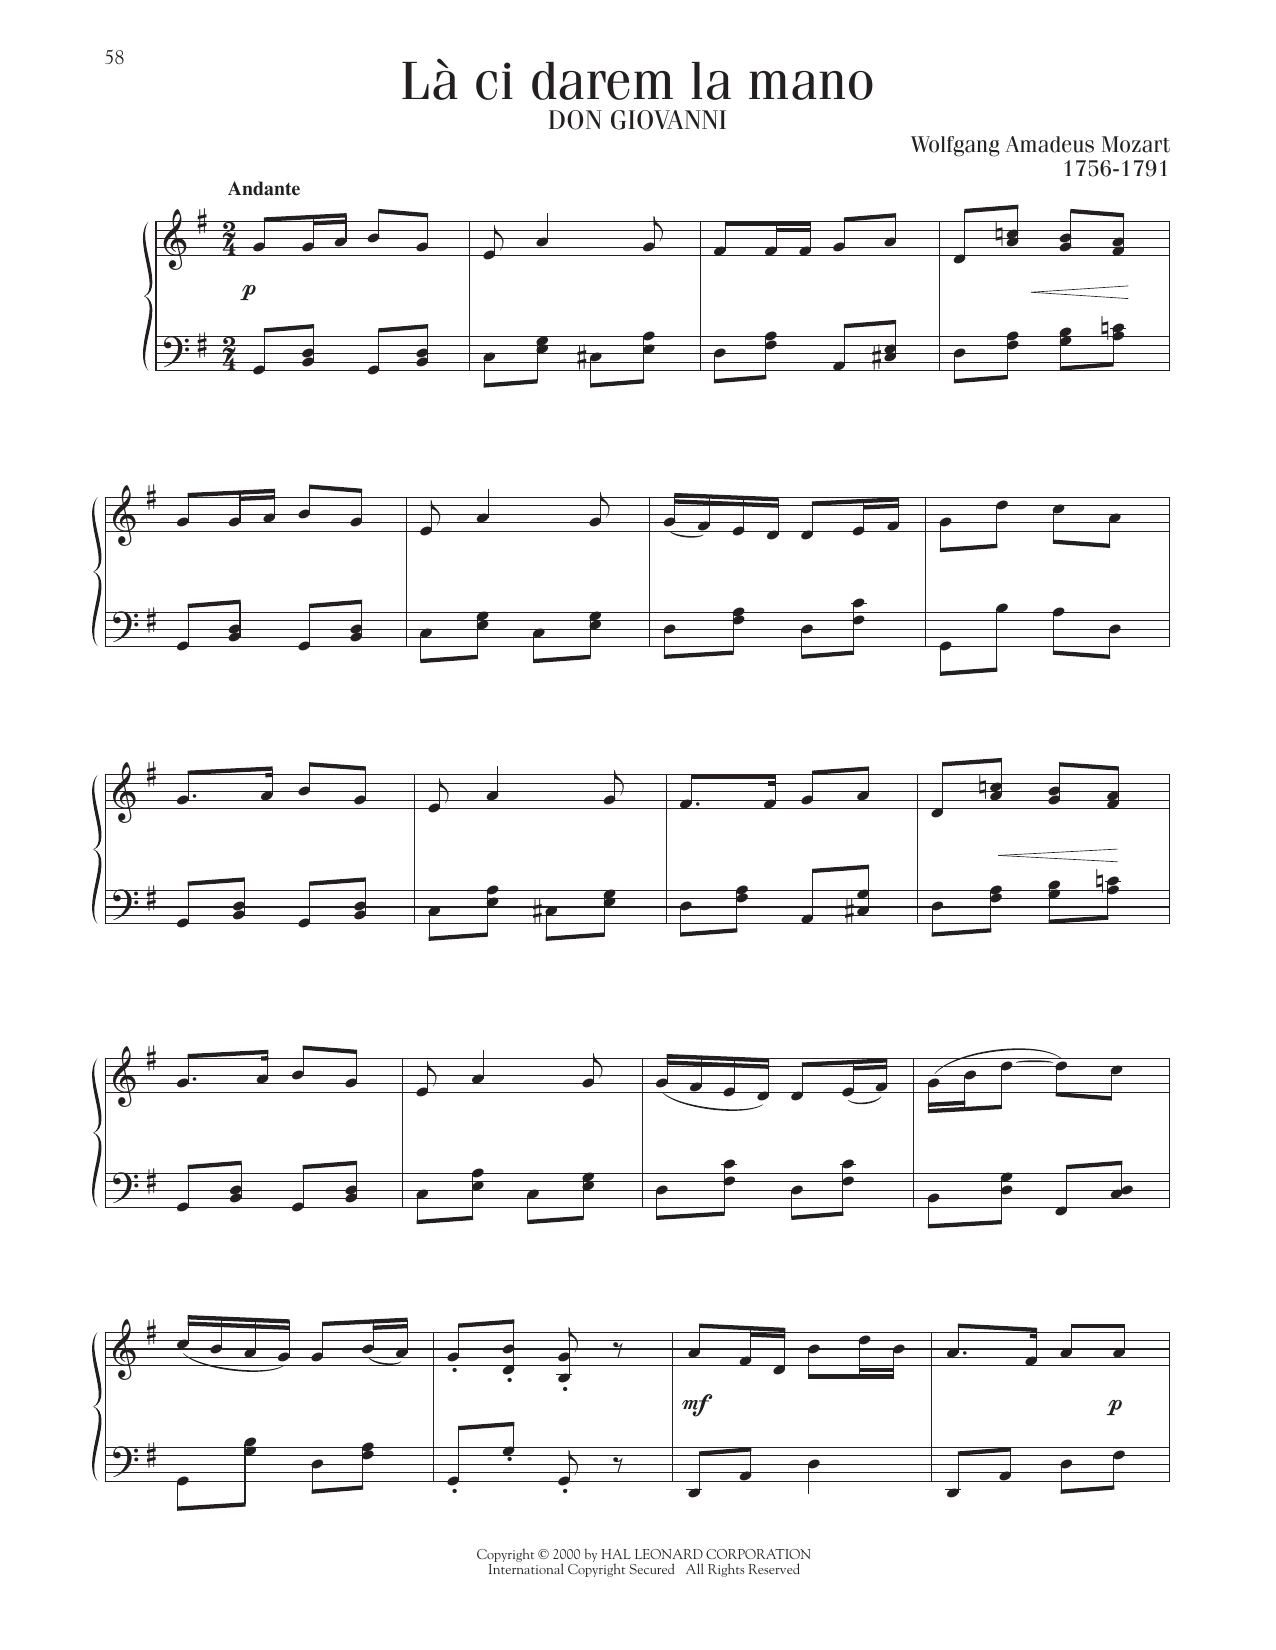 Wolfgang Amadeus Mozart La Ci Darem La Mano sheet music notes printable PDF score